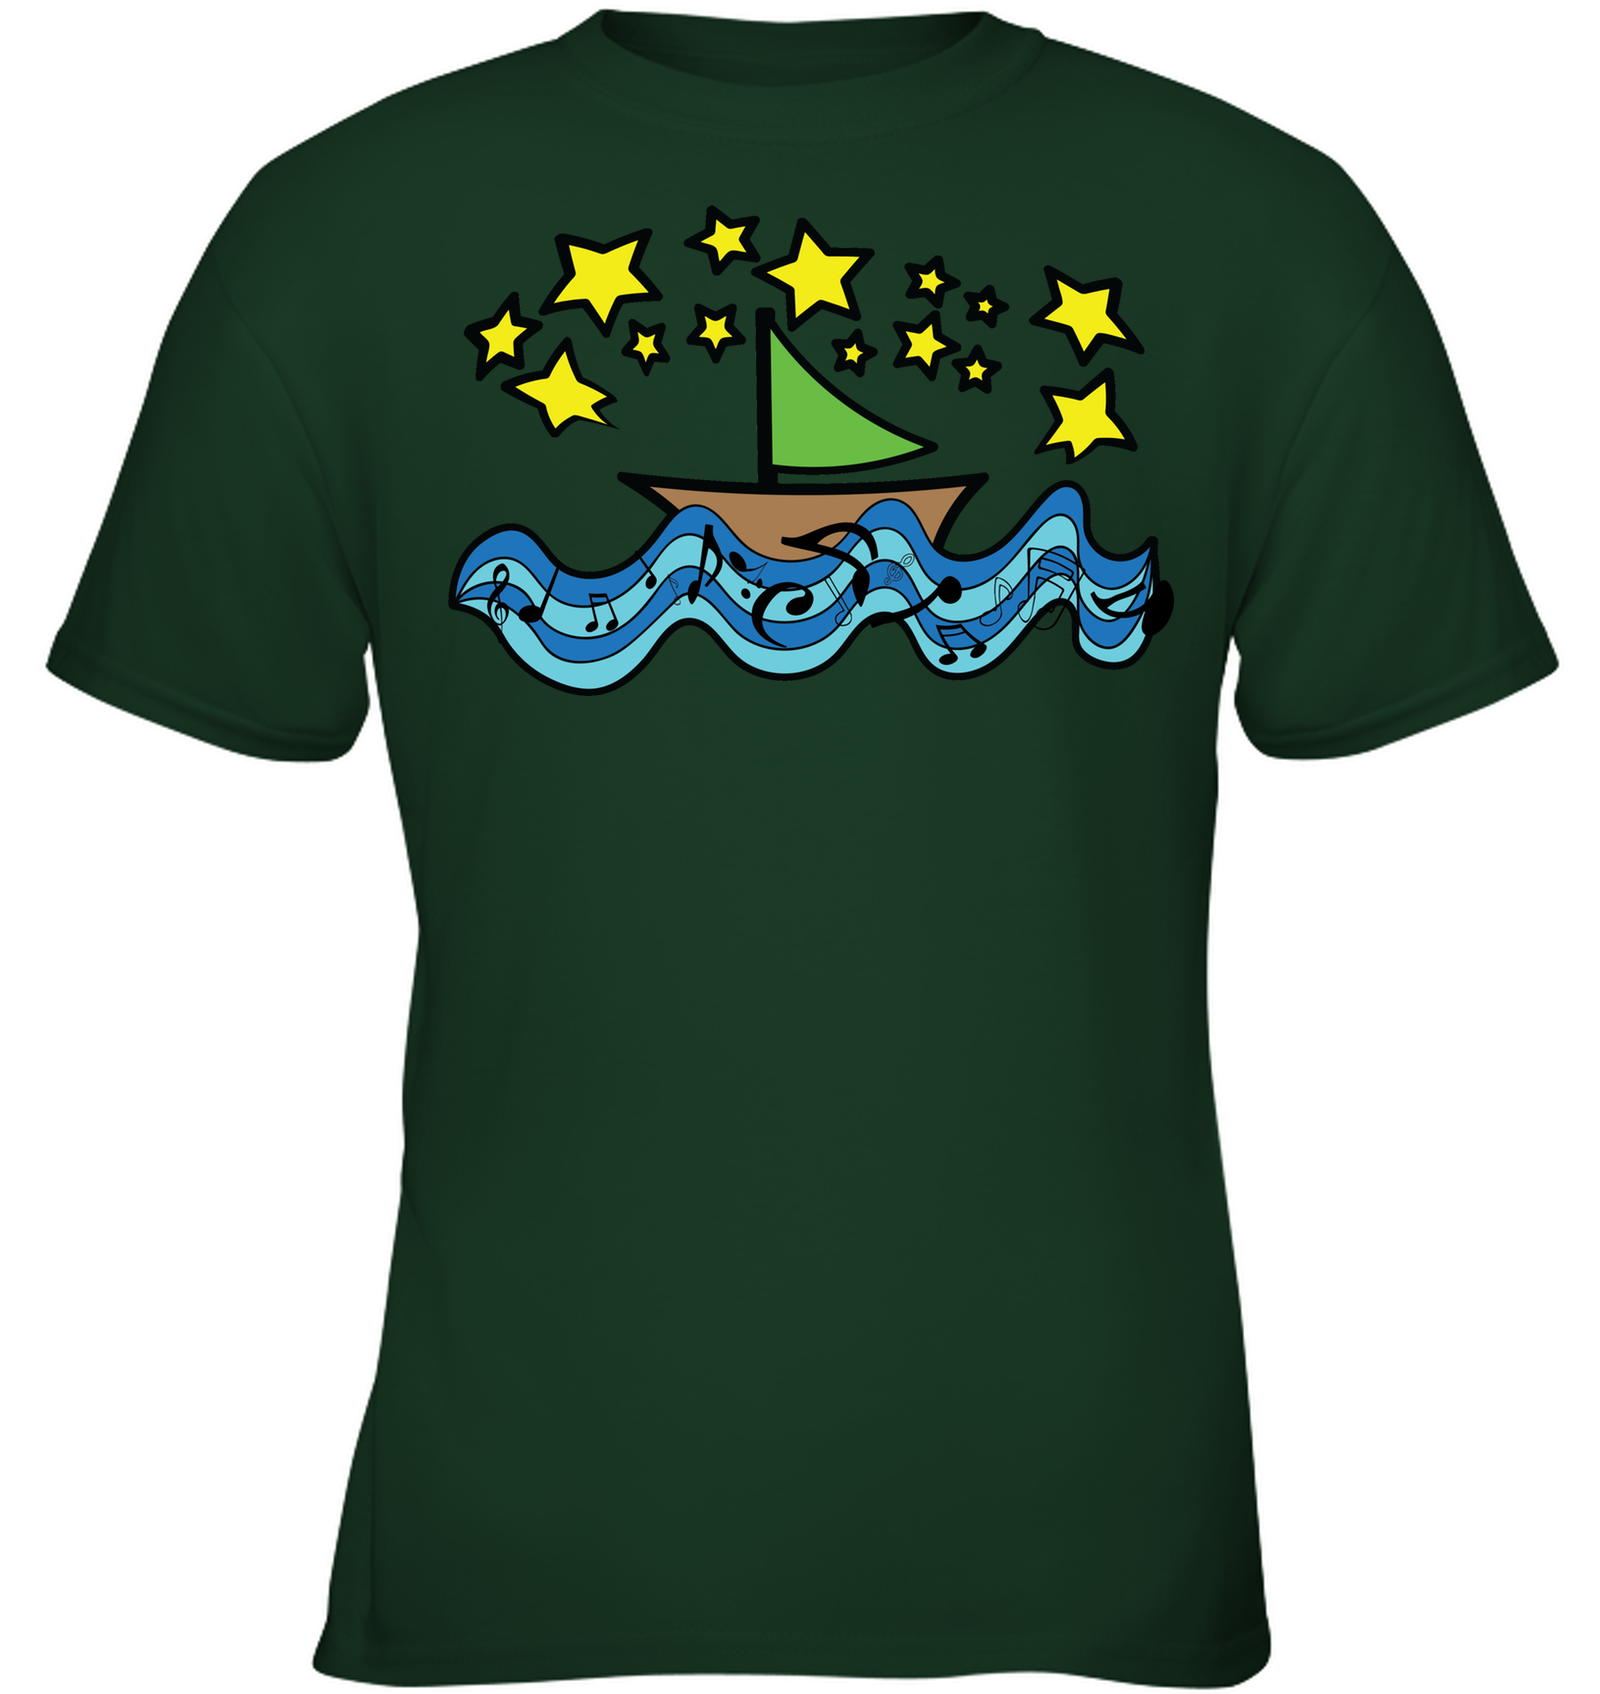 Sailing Under the Stars - Gildan Youth Short Sleeve T-Shirt